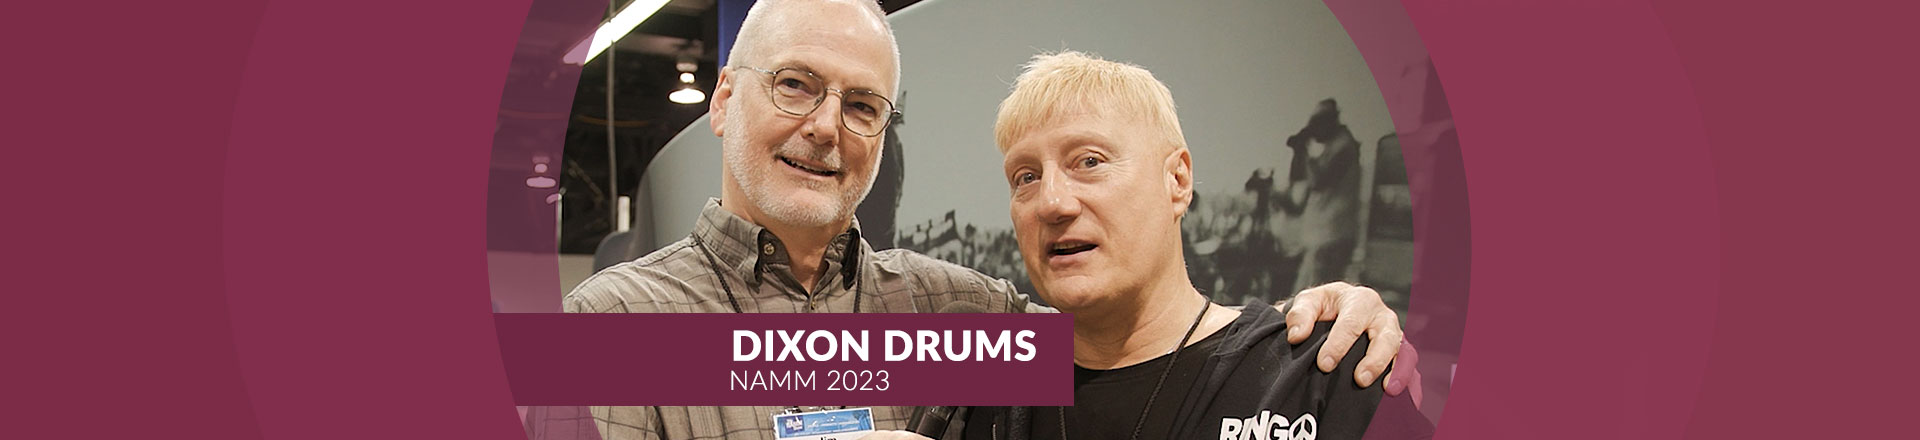 Nowości perkusyjne Dixon Drums [NAMM 2023]